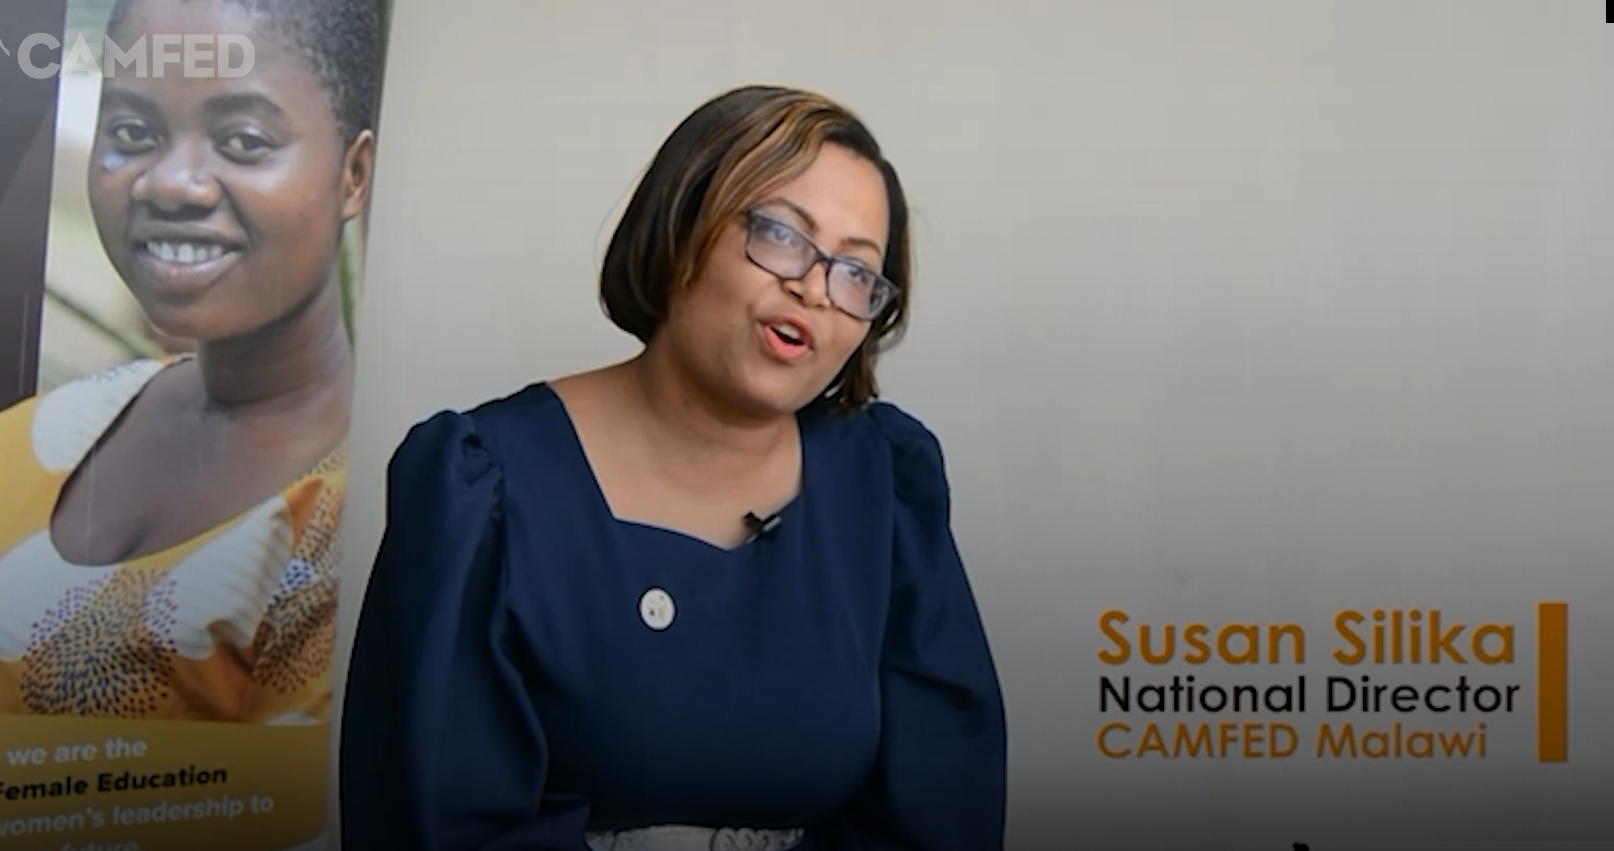 Susan-Silika-CAMFED-National-Director-DAC-Interview-Screen-shot-MW-30-06-2022